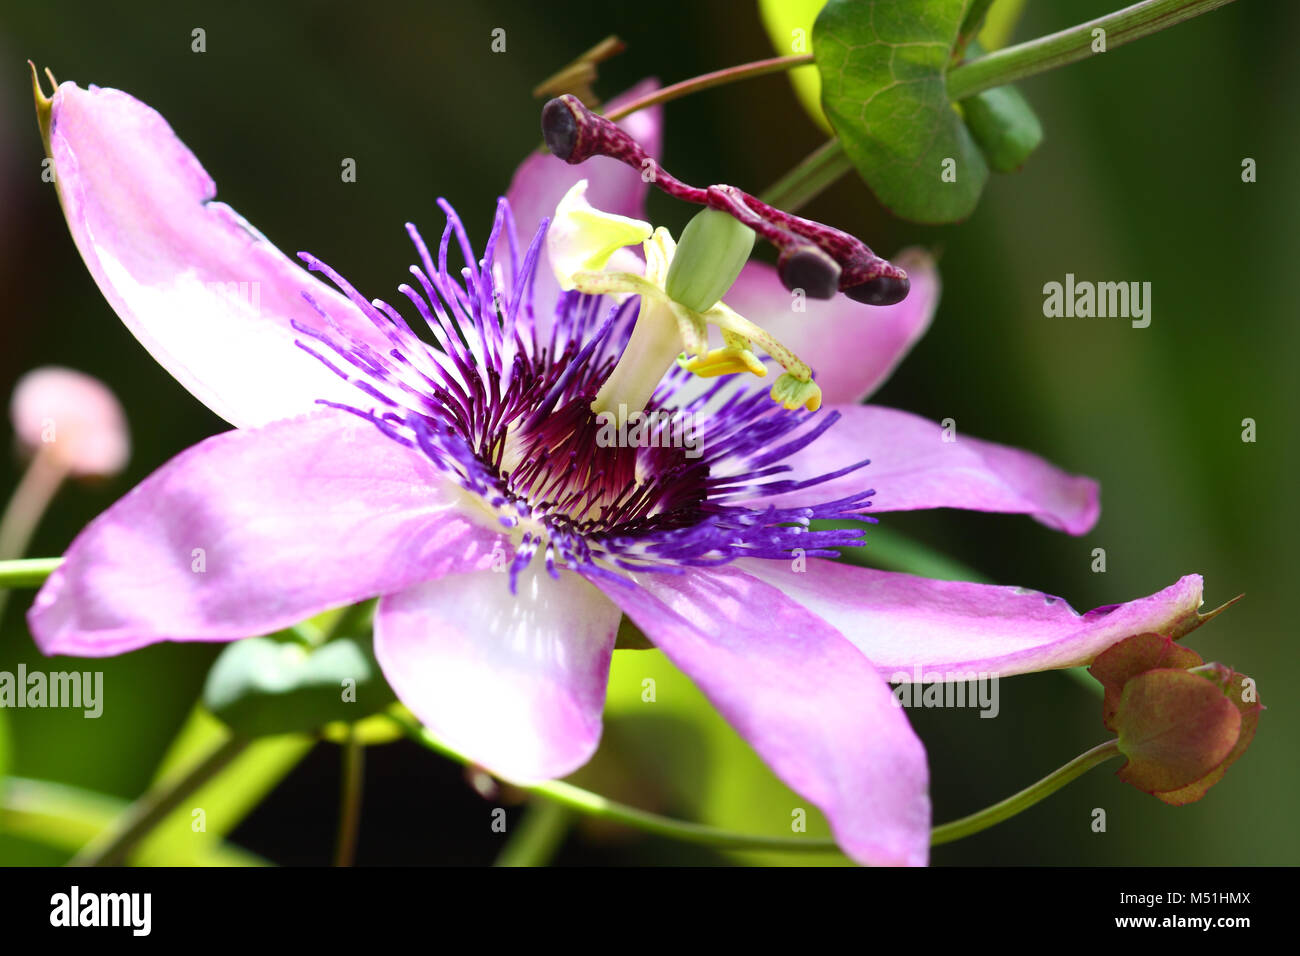 Purple passion flower latin name passiflora Stock Photo